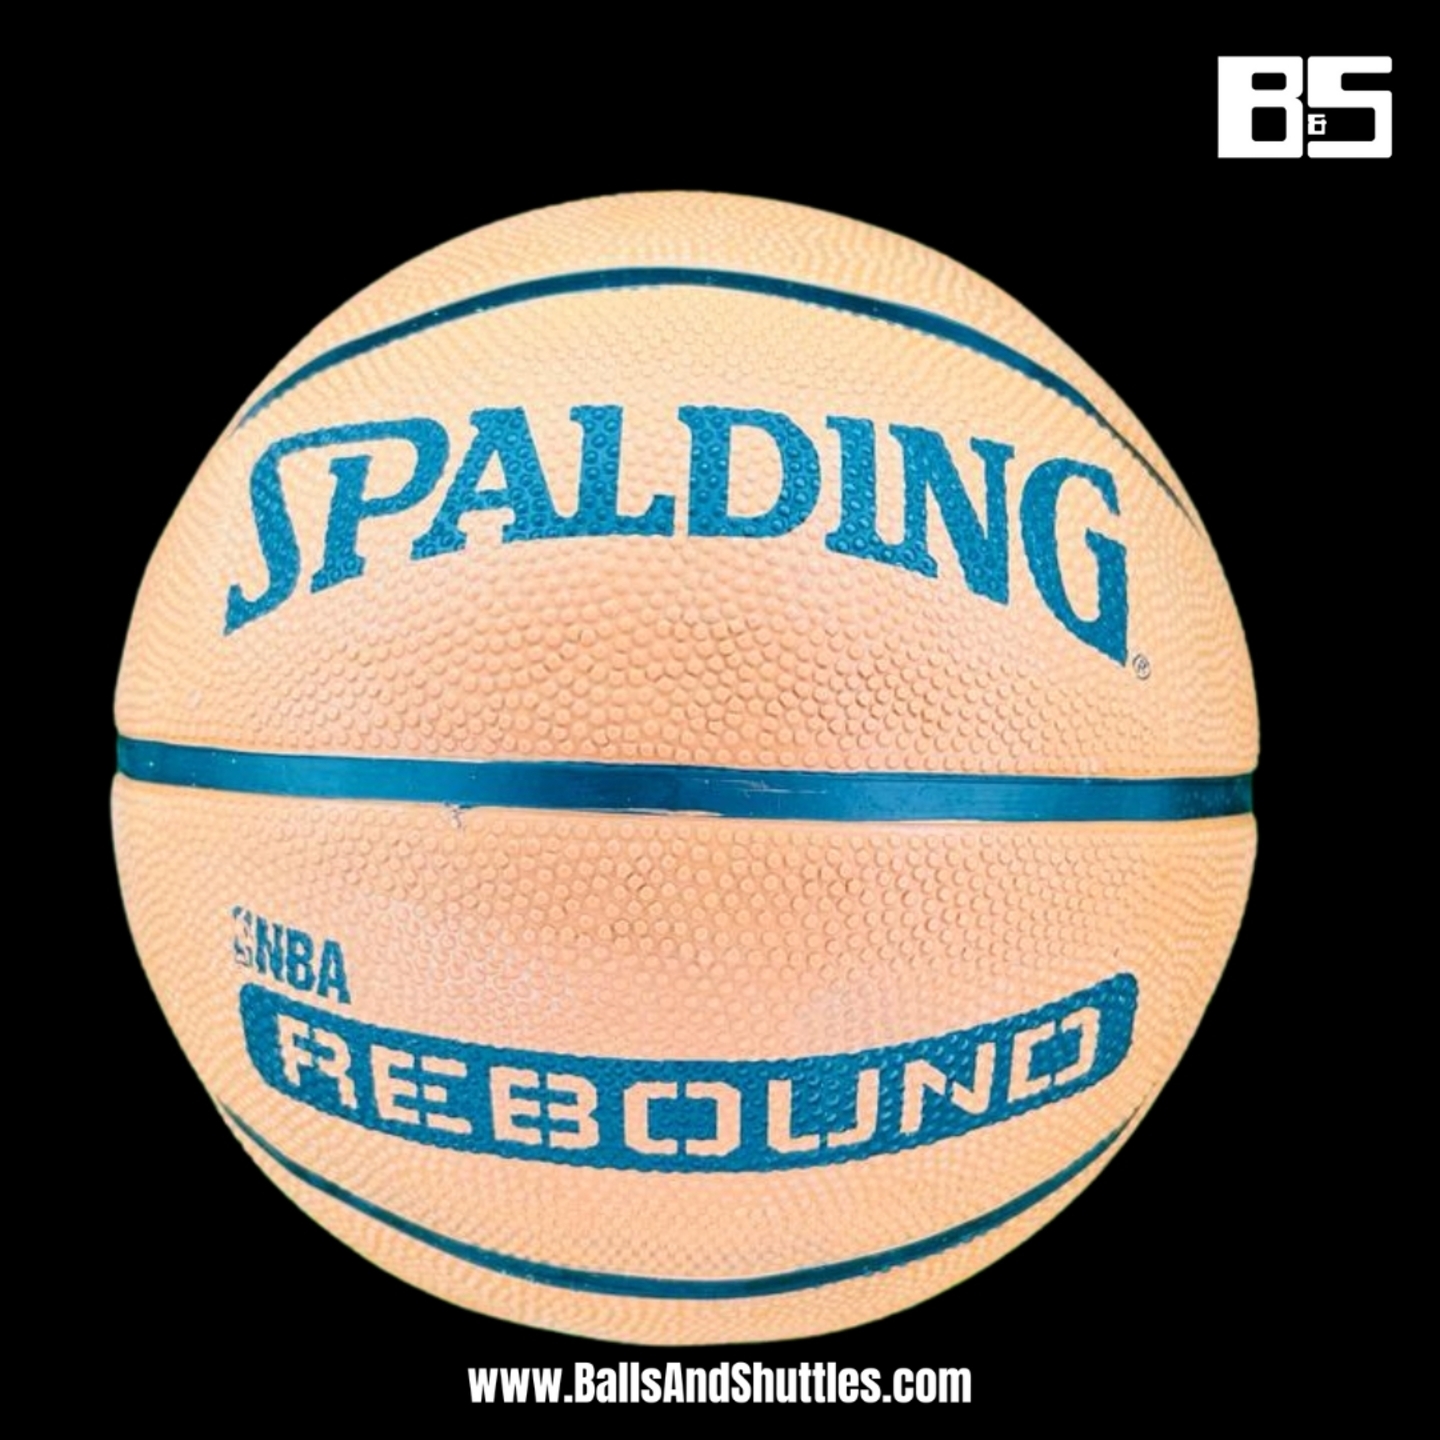 SPALDING NBA REBOUND BASKETBALL | SPALDING SIZE 6 BASKETBALL | SPALDING BASKETBALL